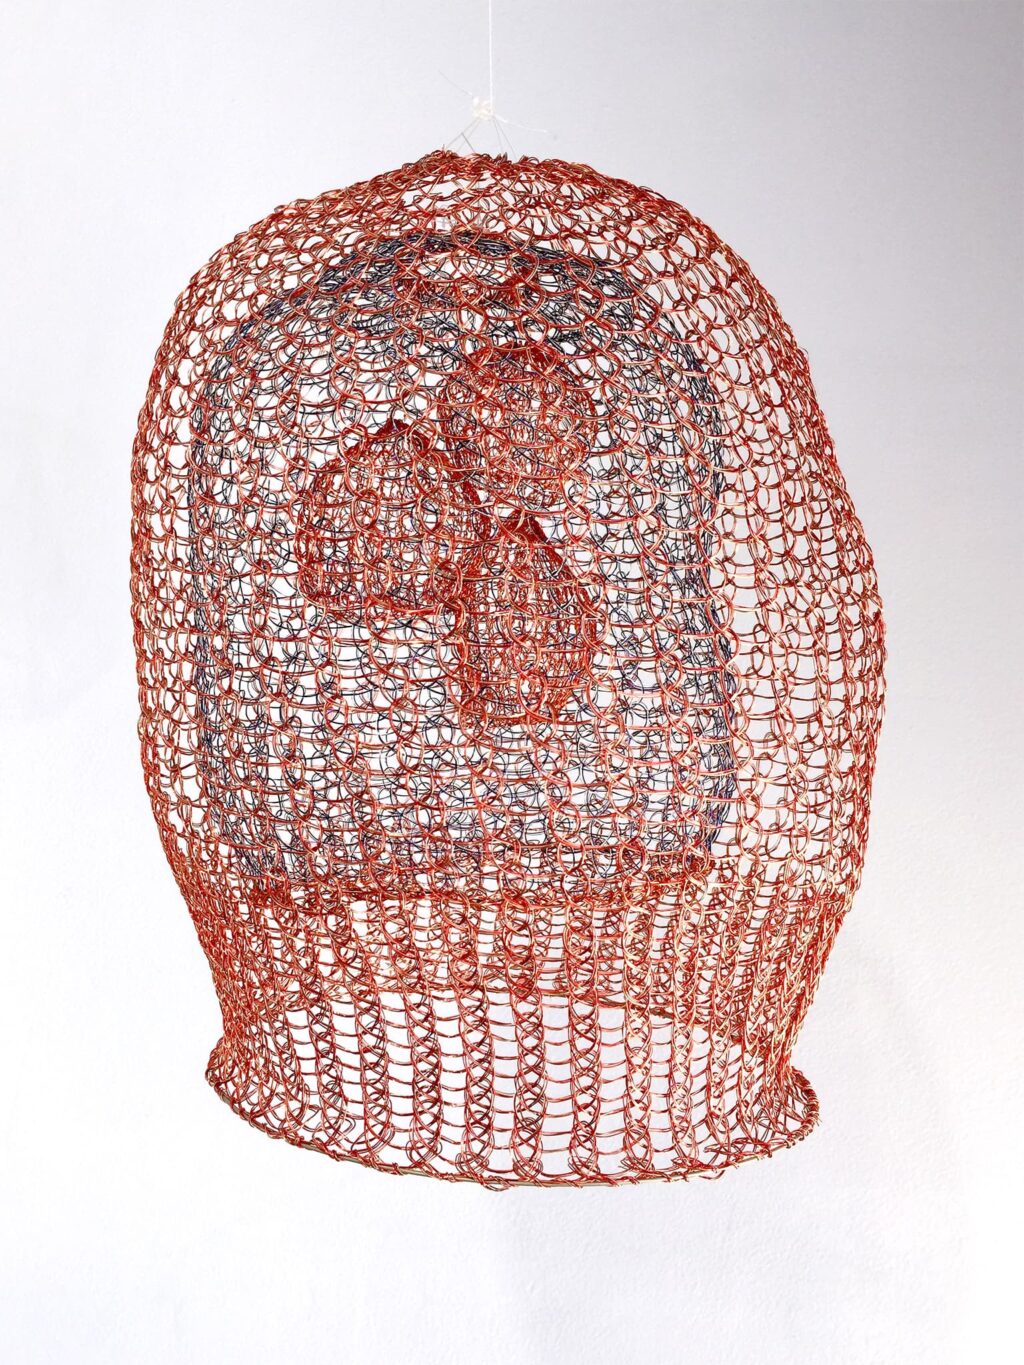 Arline Fisch, Lantern, 2008-2018, Aquatic Bloom, Craft in America